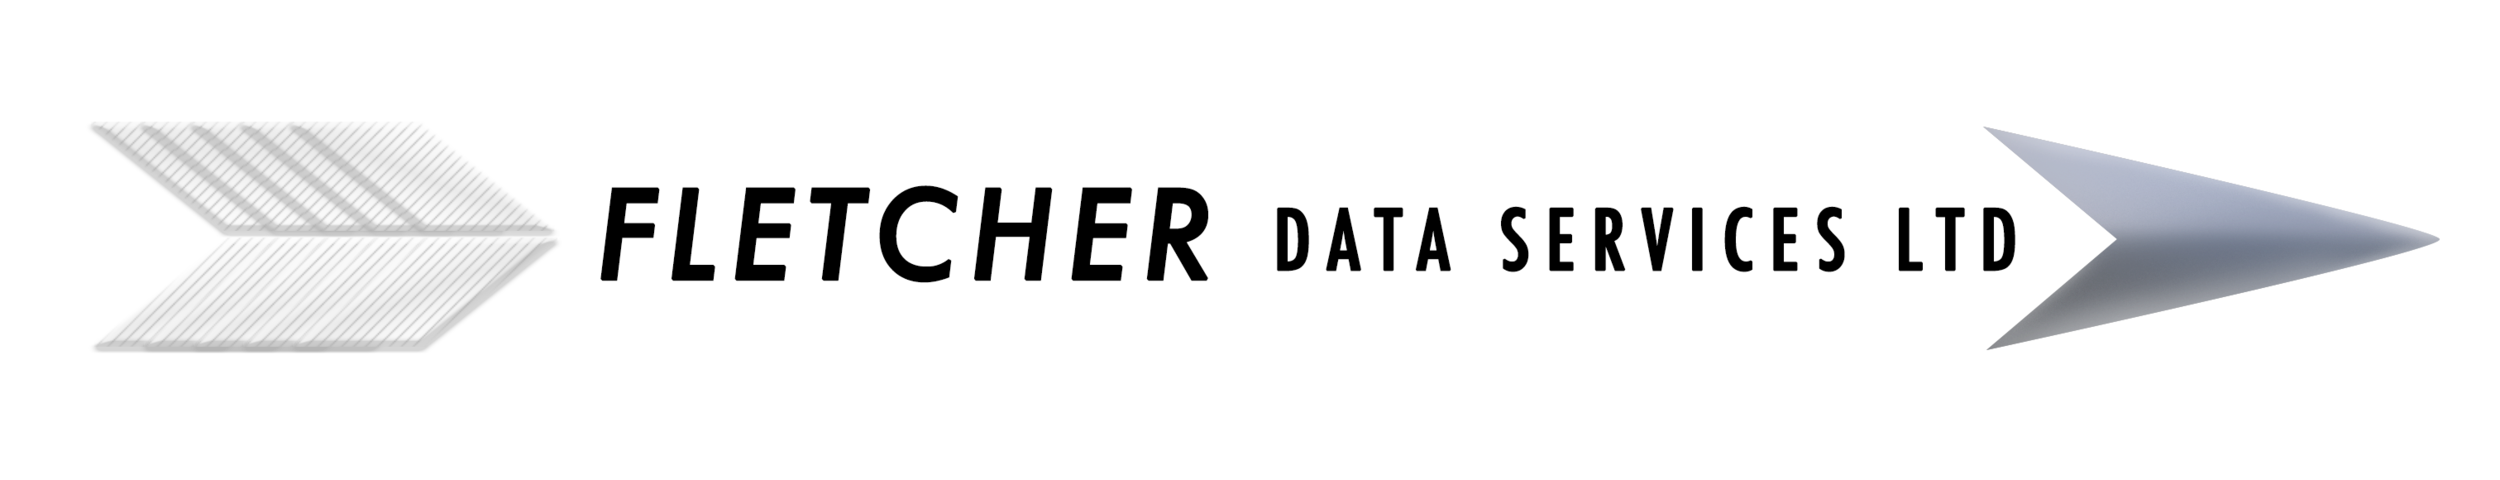 Fletcher Data Services Ltd